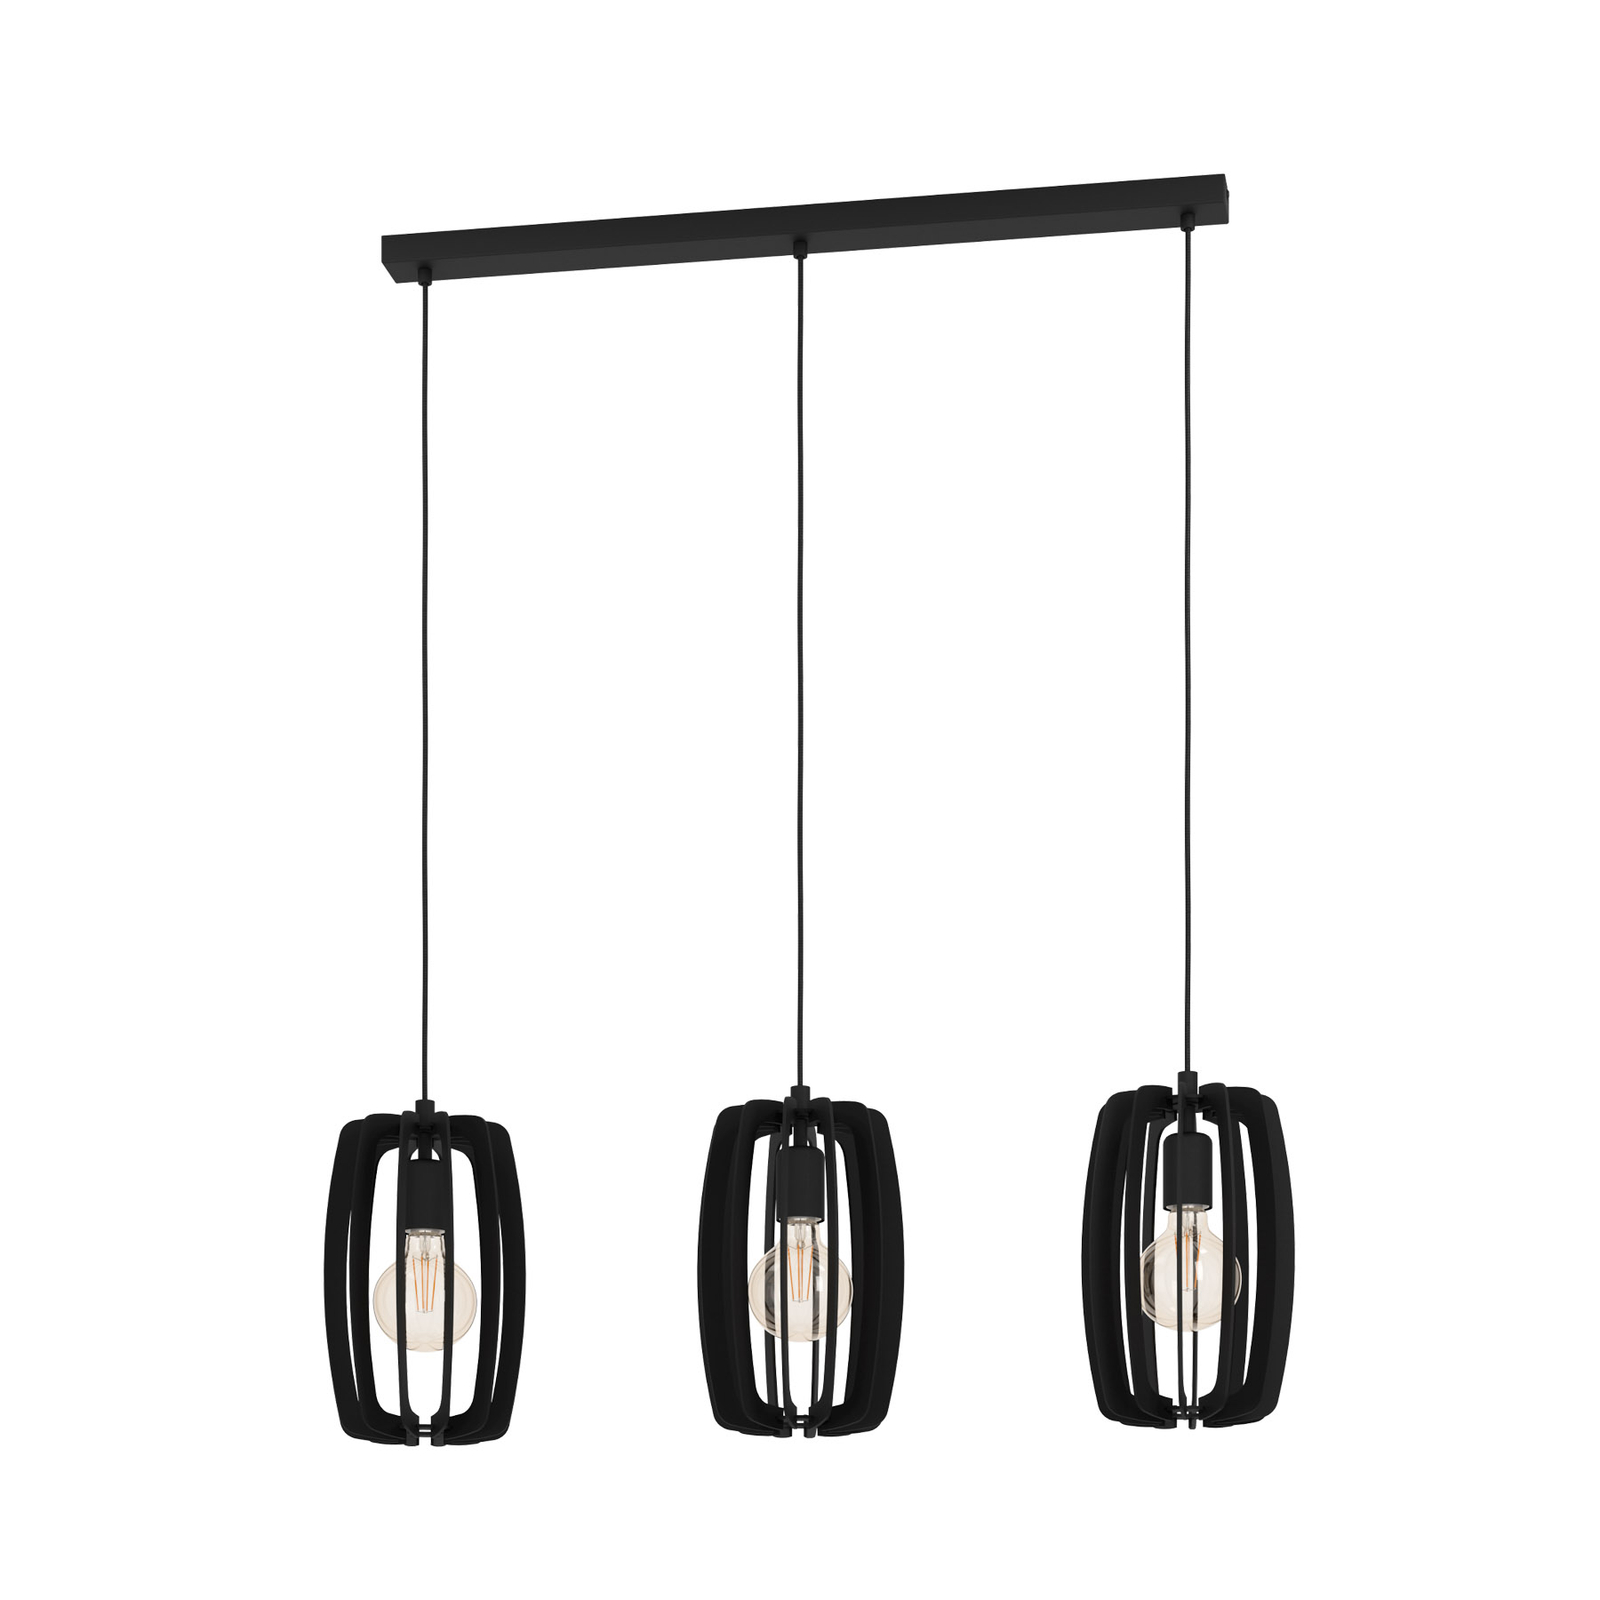 Bajazzara pendant light, three cage shades, black